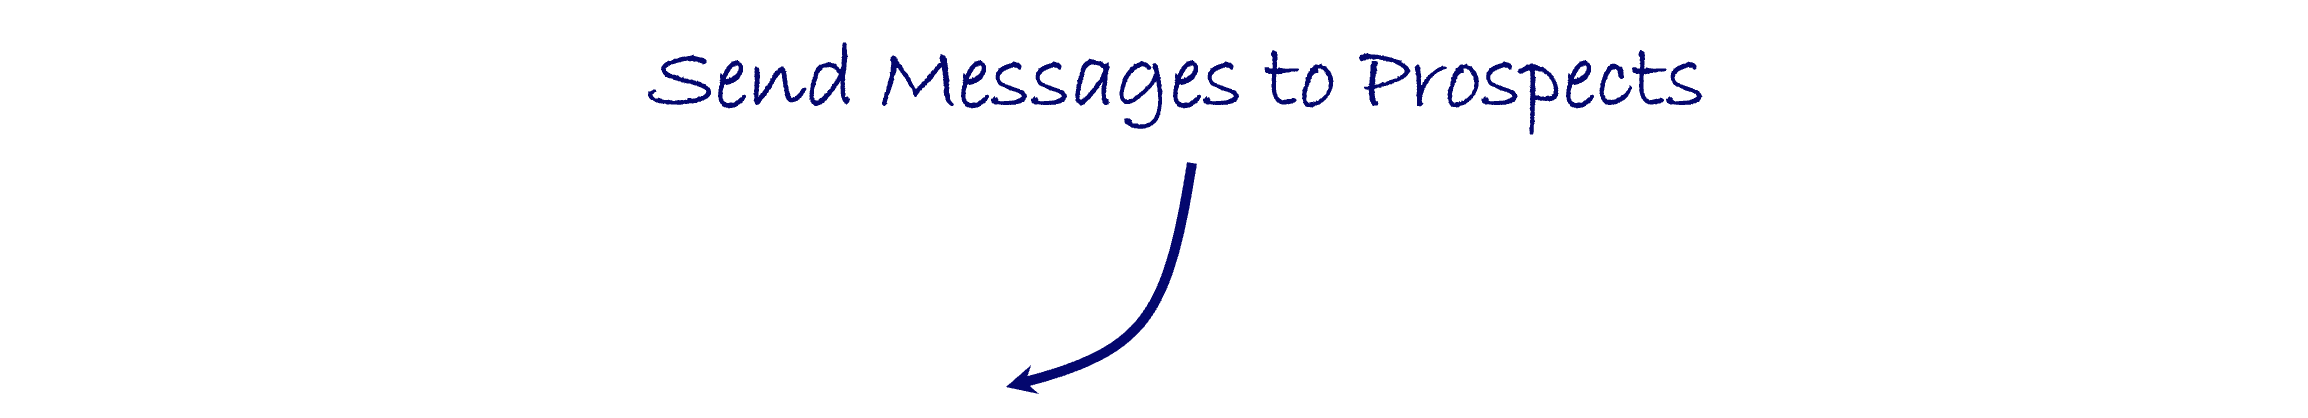 Koneksi Message Sending